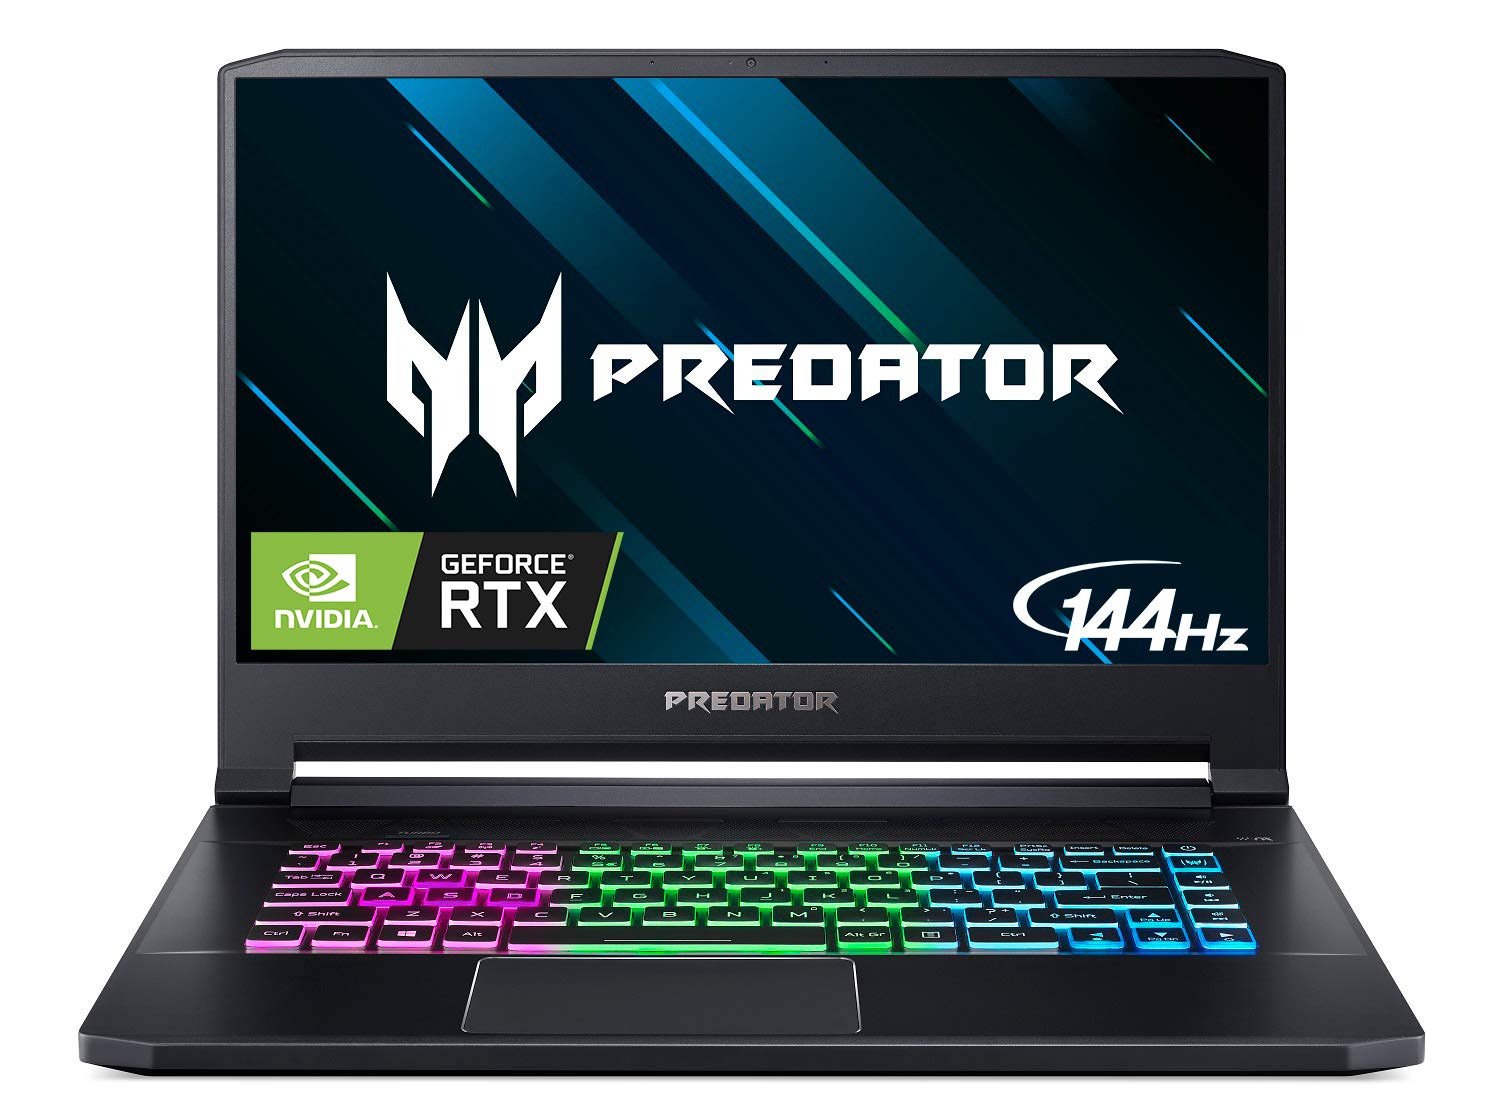 Acer Predator Triton 500 Thin & Light Gaming Laptop, Intel Core i7-9750H, GeForce RTX 2070 Max-Q, 15.6